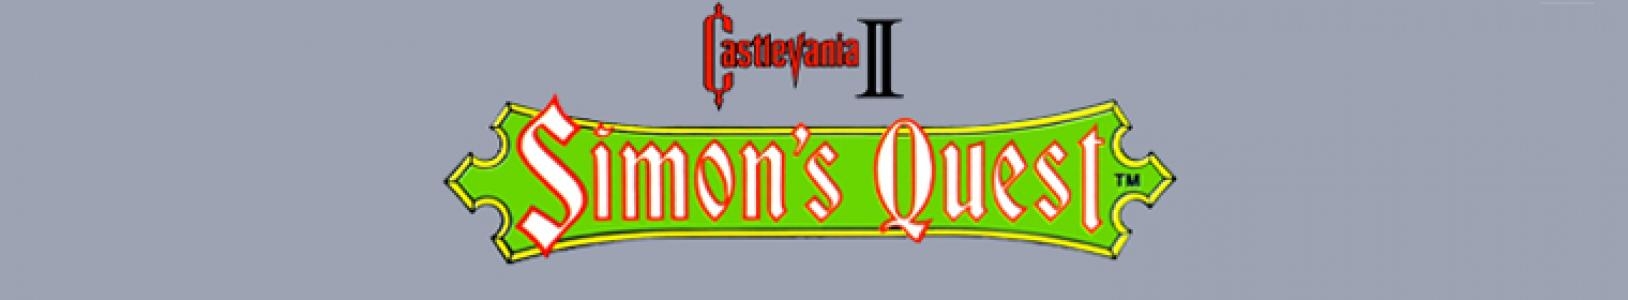 Castlevania II: Simon's Quest banner